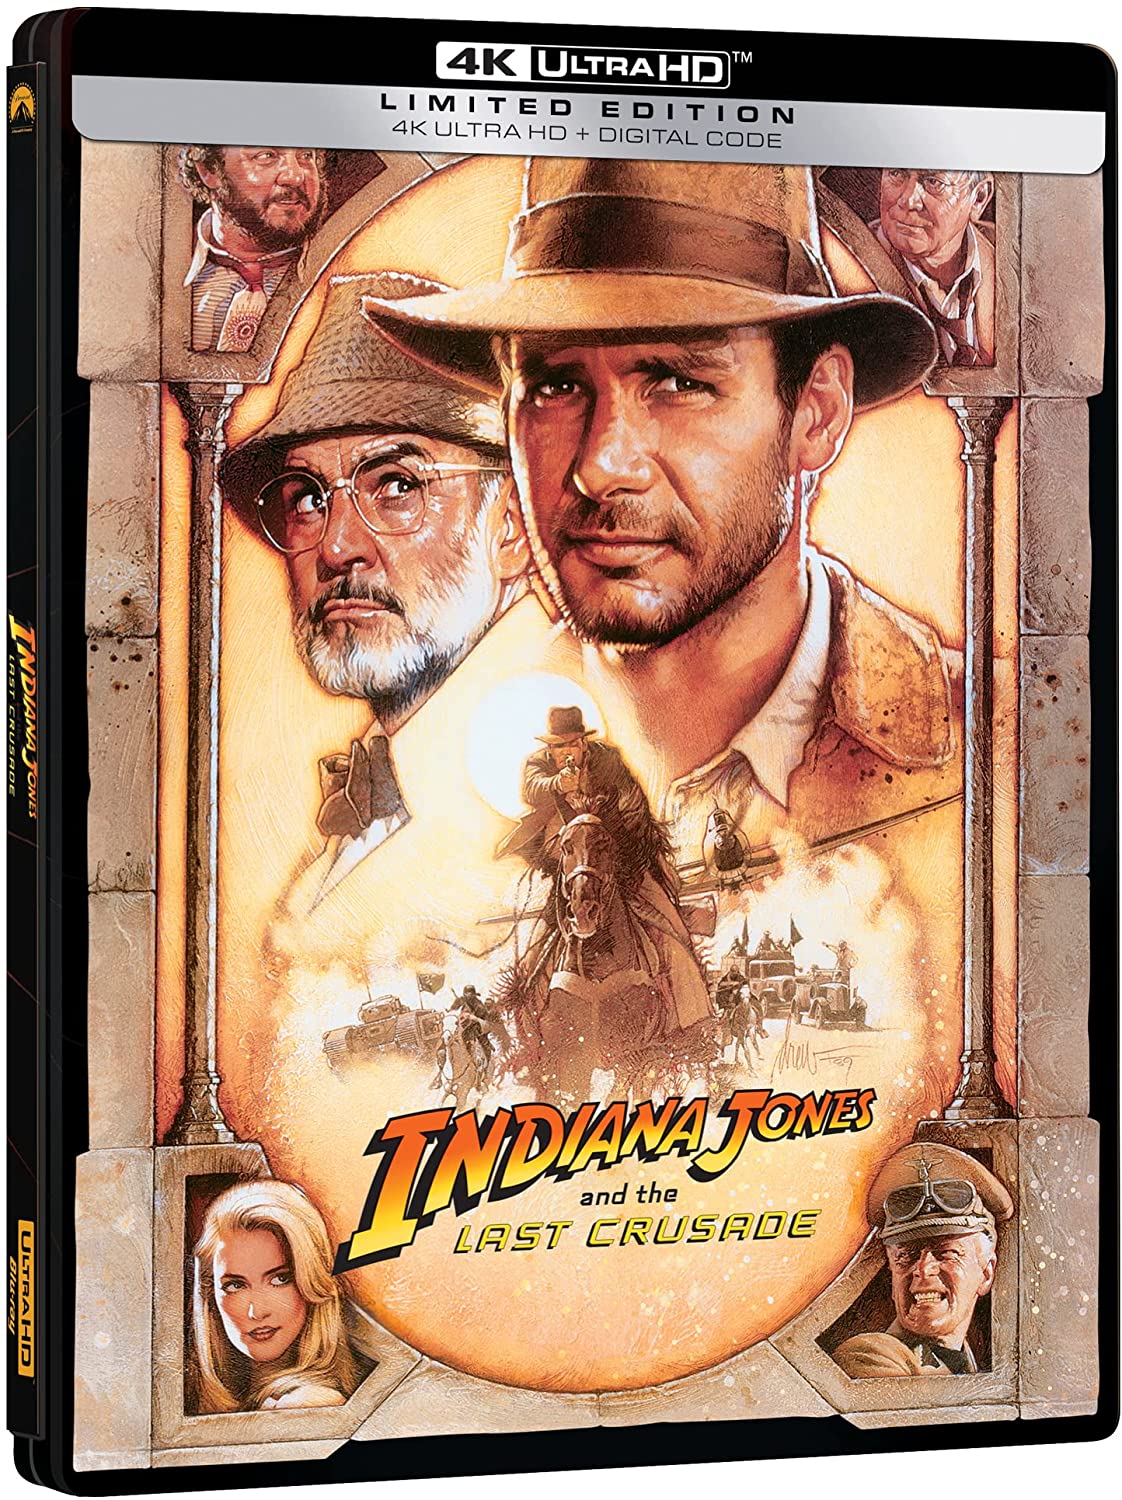 Indiana Jones And The Last Crusade 4K SteelBook front.jpg